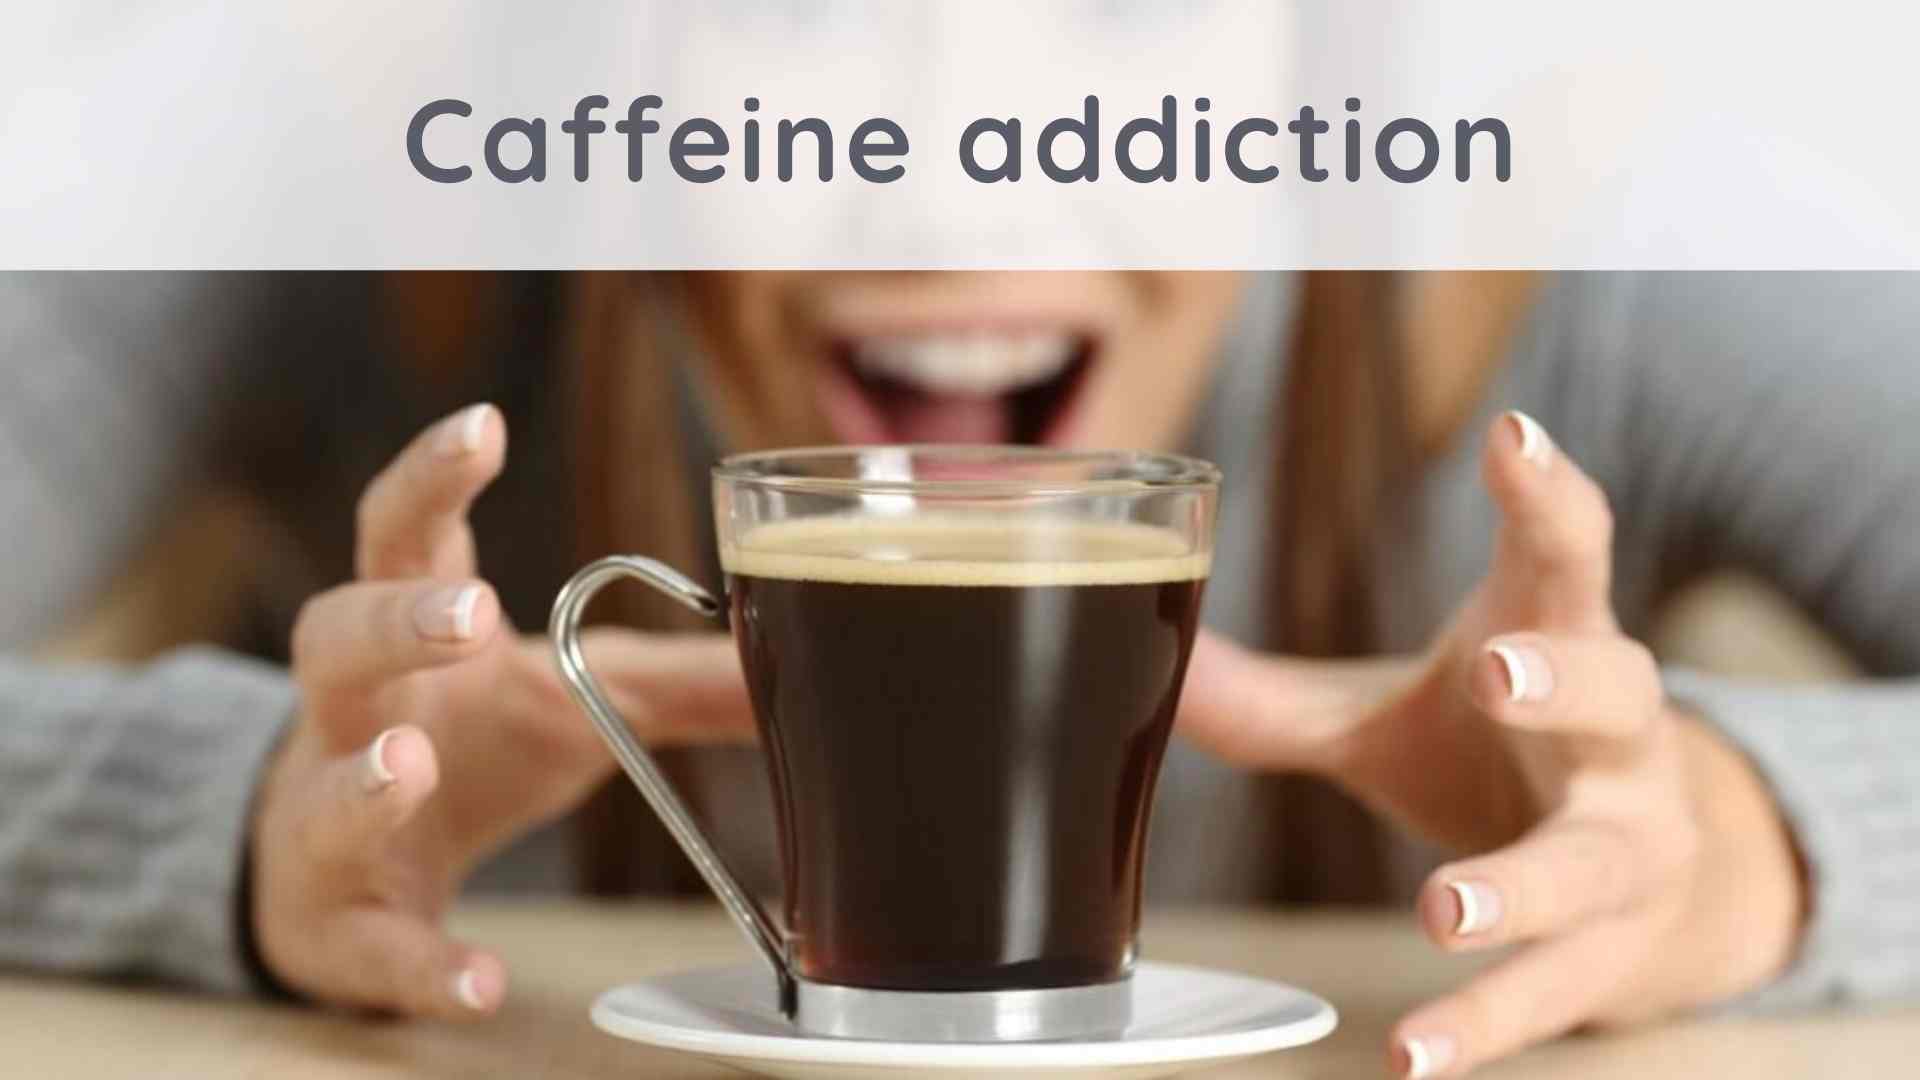 Coffee addiction: Do people consume too much caffeine? - BBC News